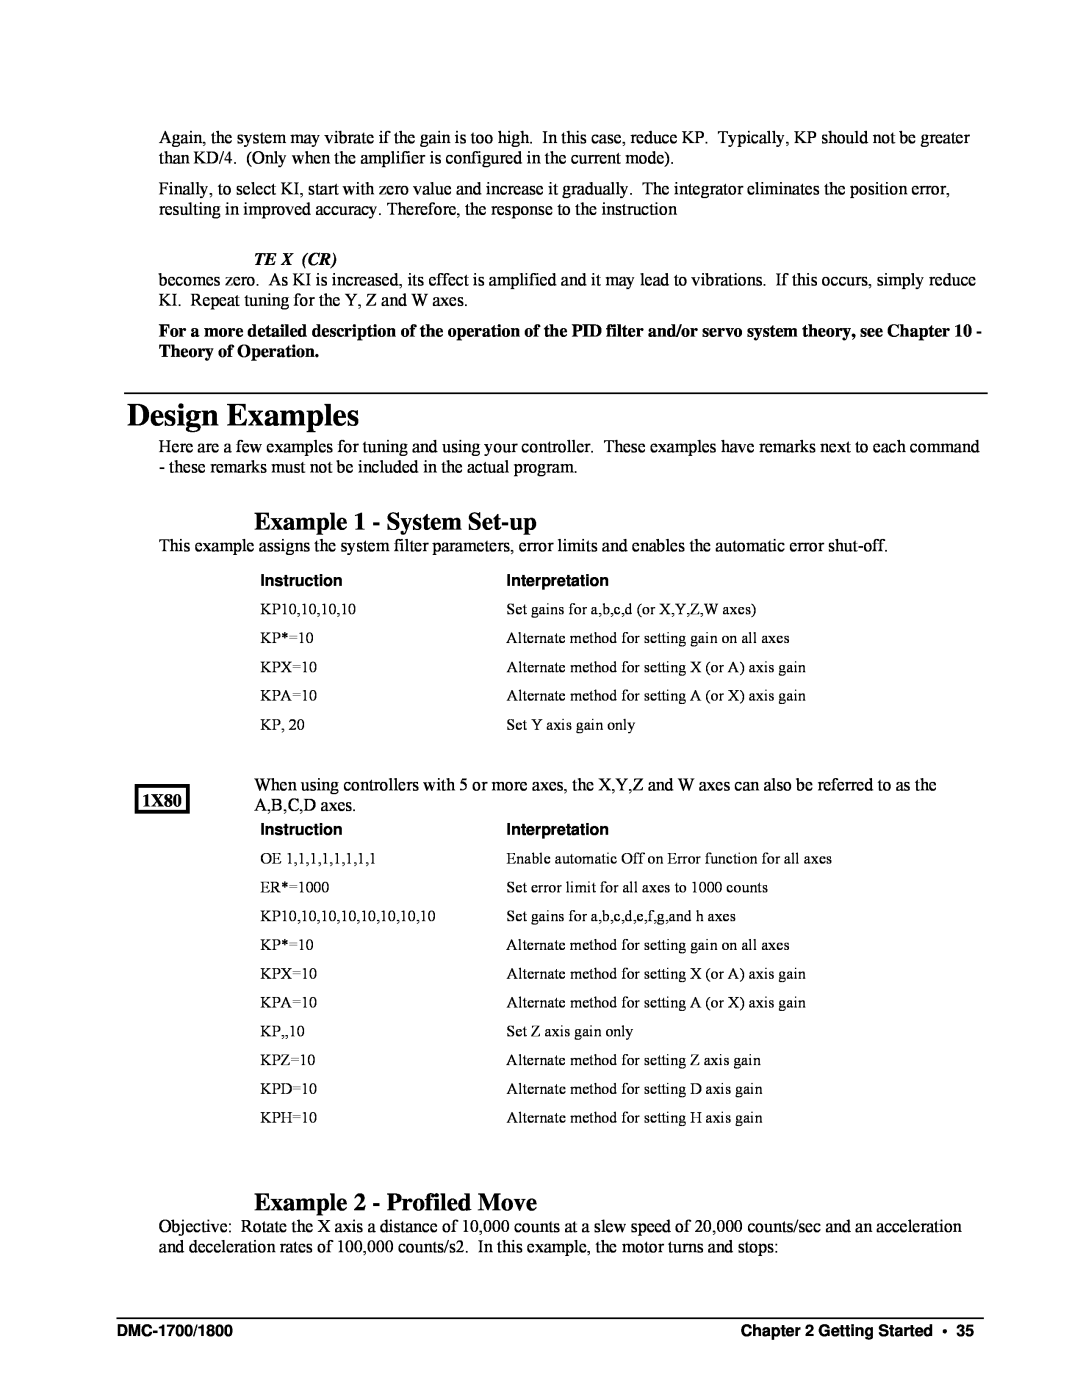 Galil DMC-1700, DMC-1800 user manual Design Examples, Example 1 - System Set-up, Example 2 - Profiled Move, Te X Cr, 1X80 